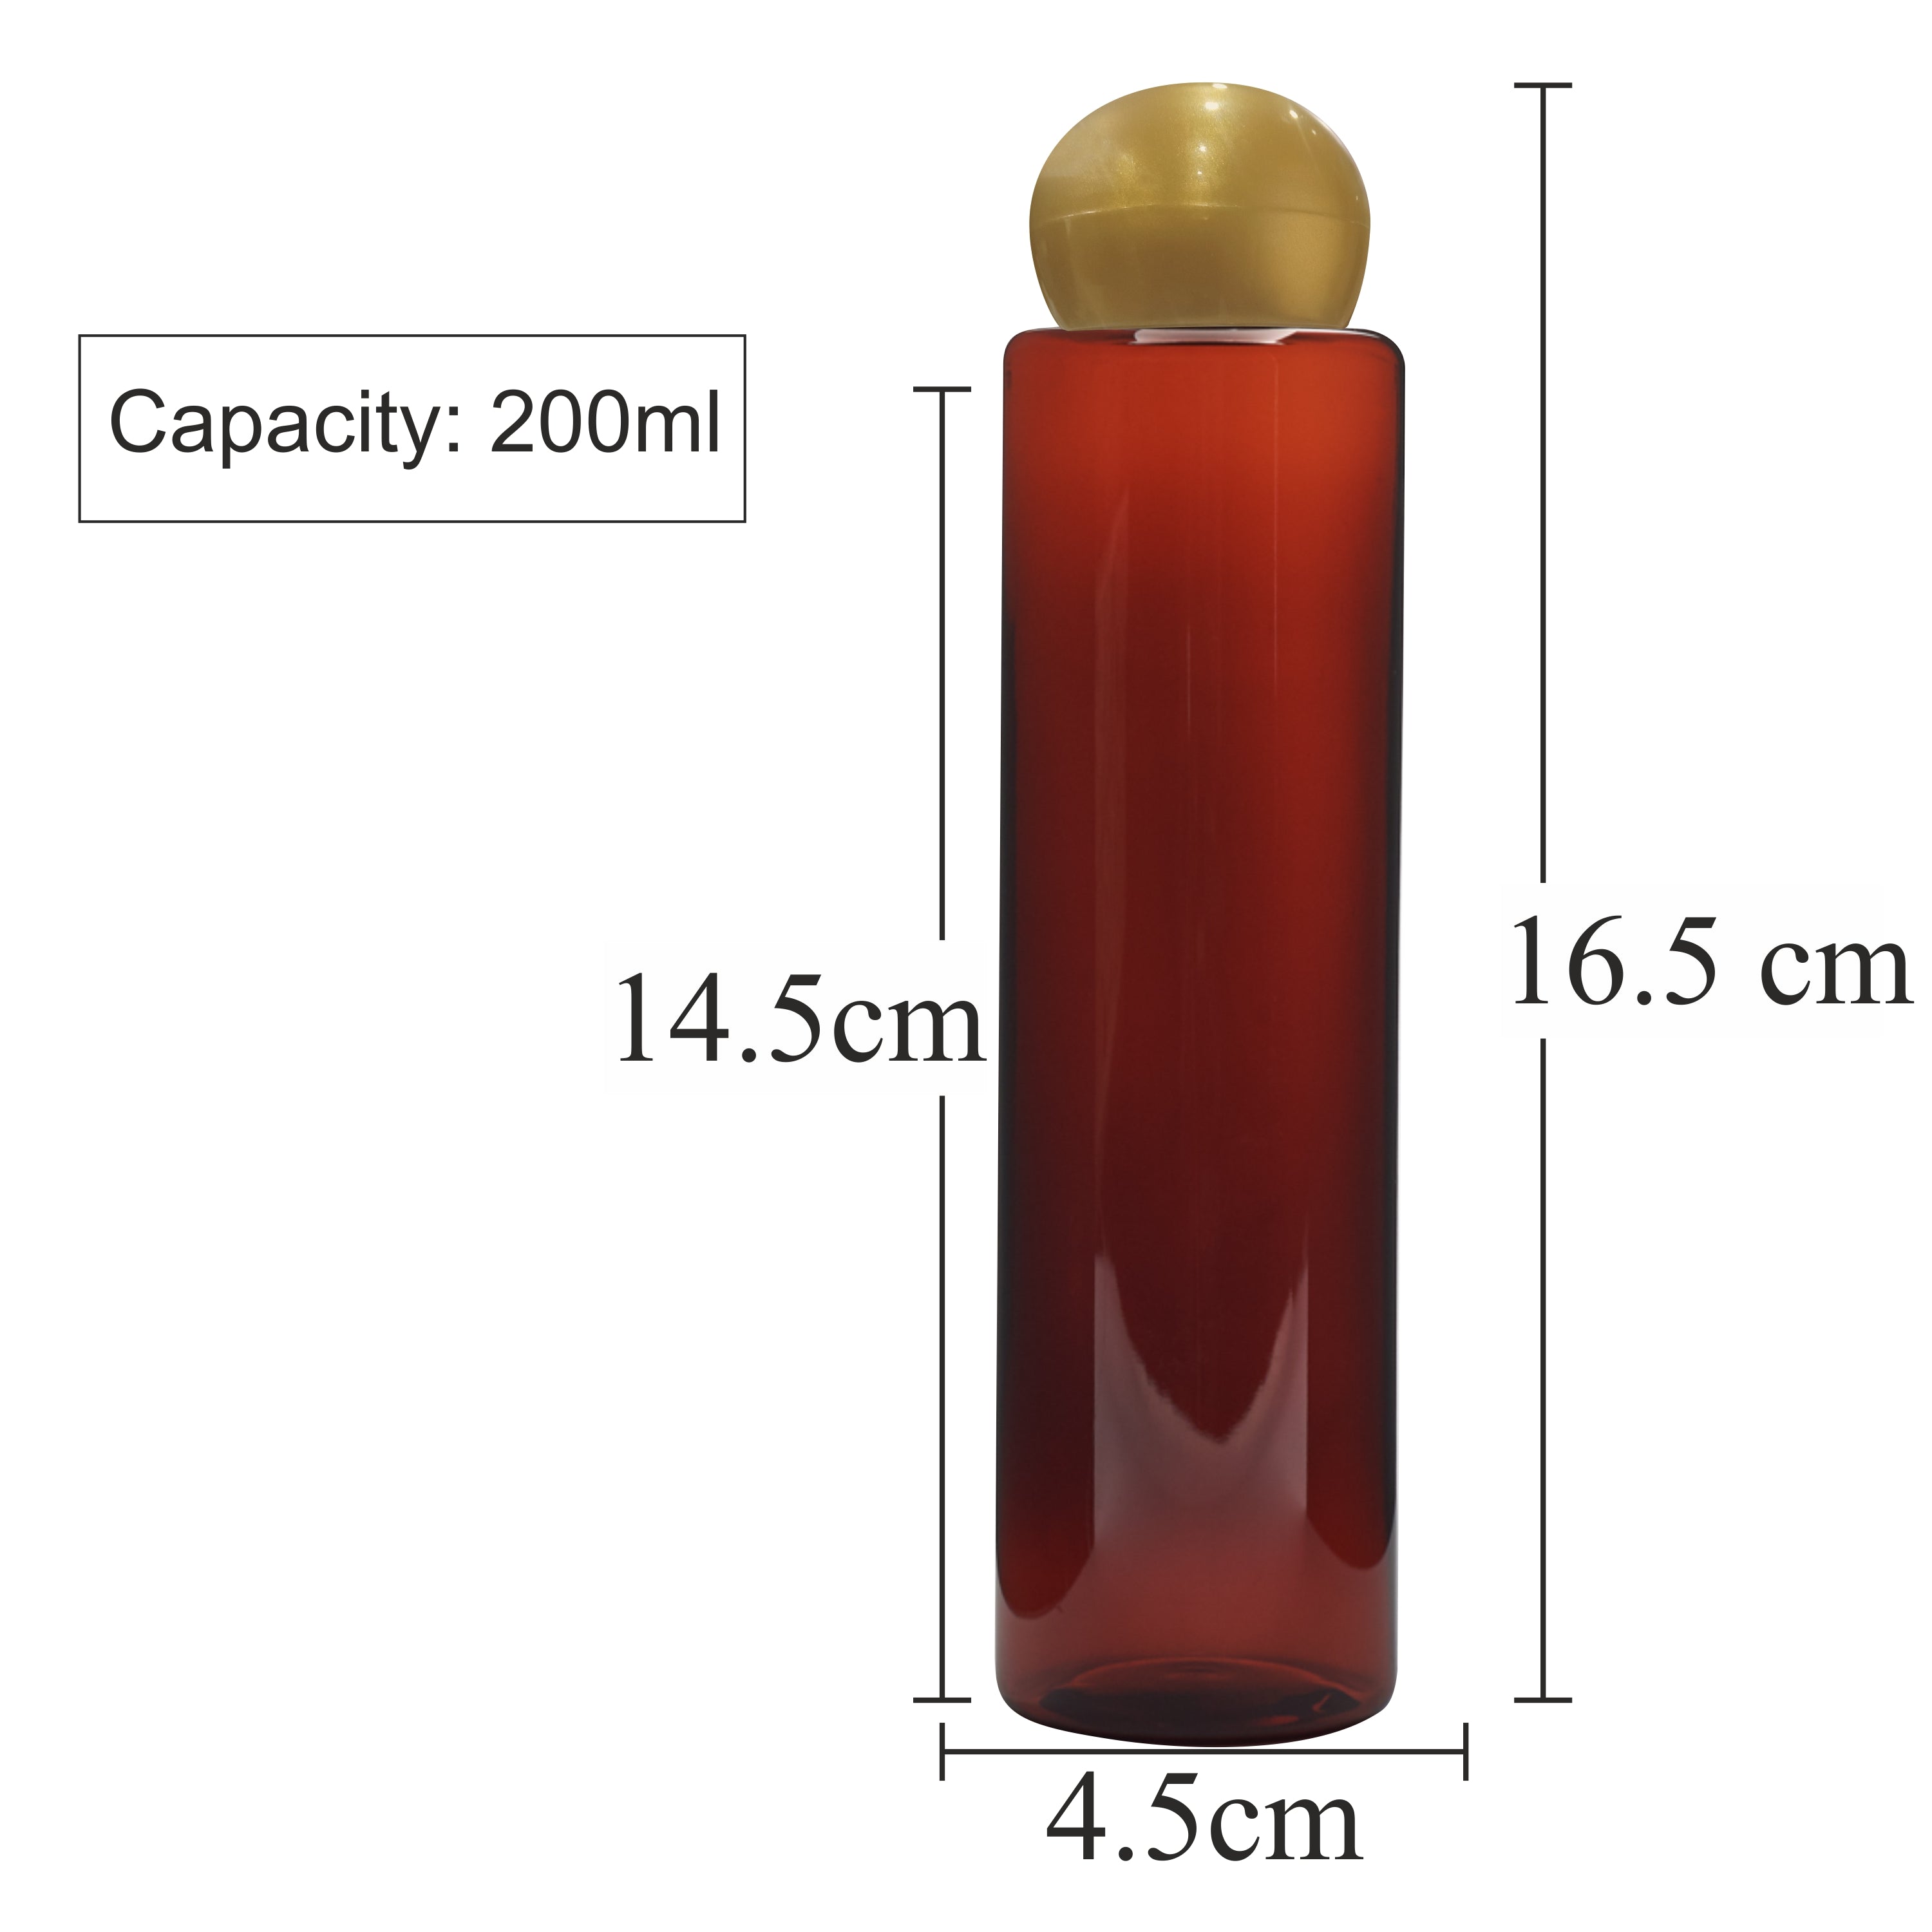 Amber Color Premium Bottles With Golden Dom Cap 200 ML [ZMA21]